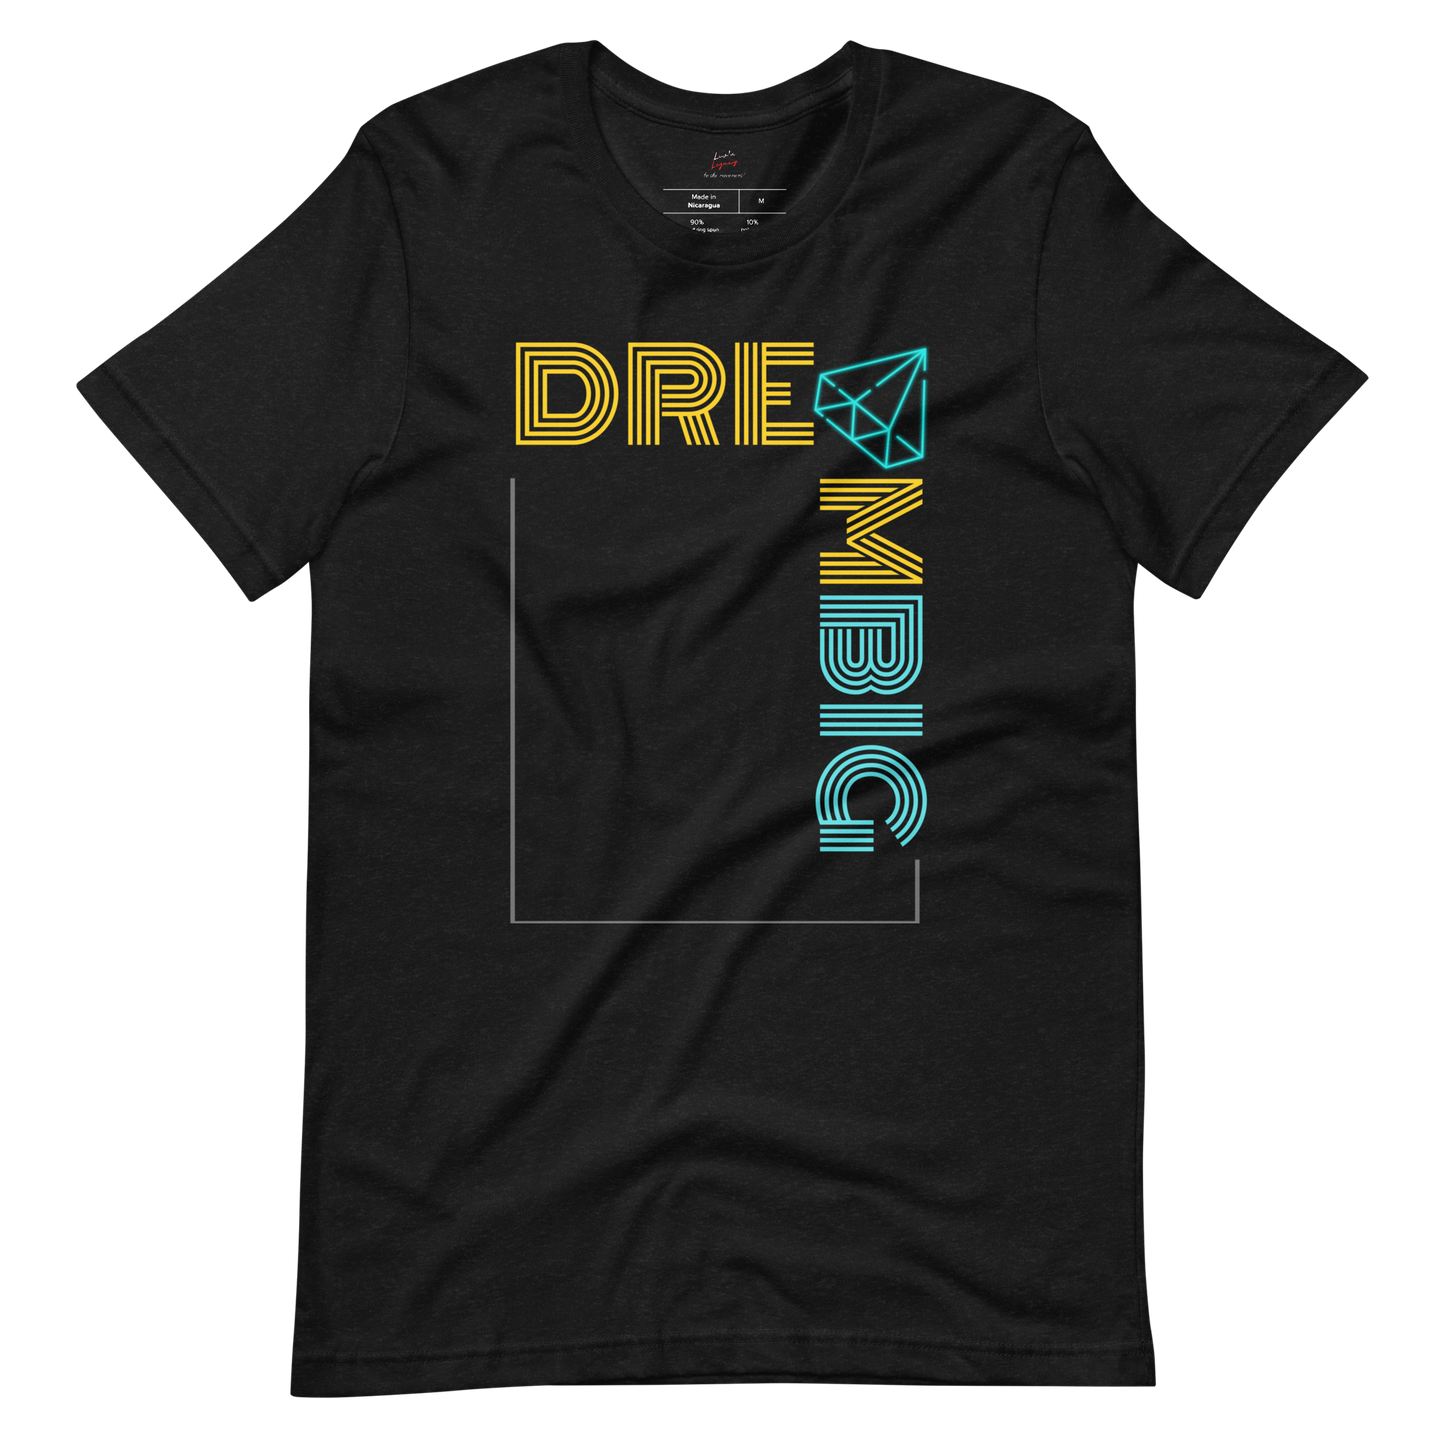 Dream Big Legacy T-Shirt